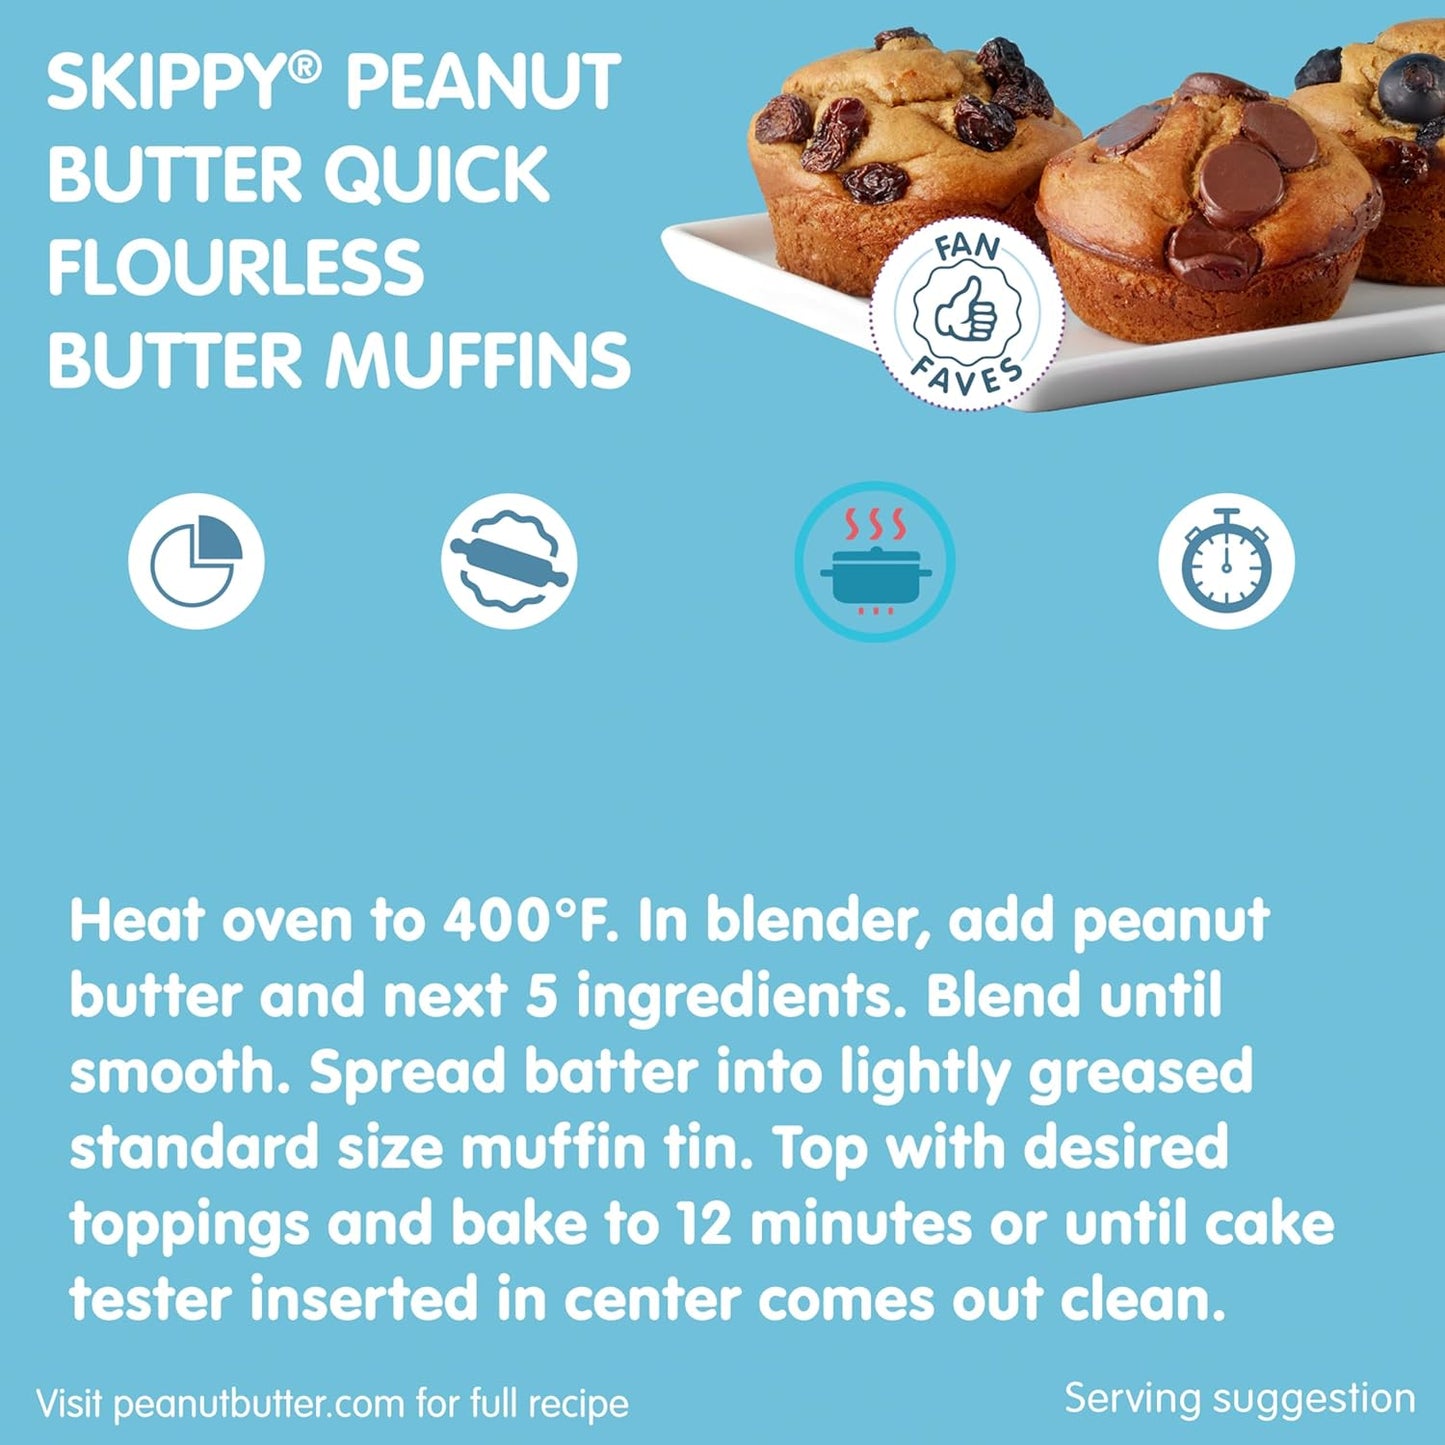 SKIPPY SUPER CHUNK Extra Crunchy Peanut Butter, 64 Ounce